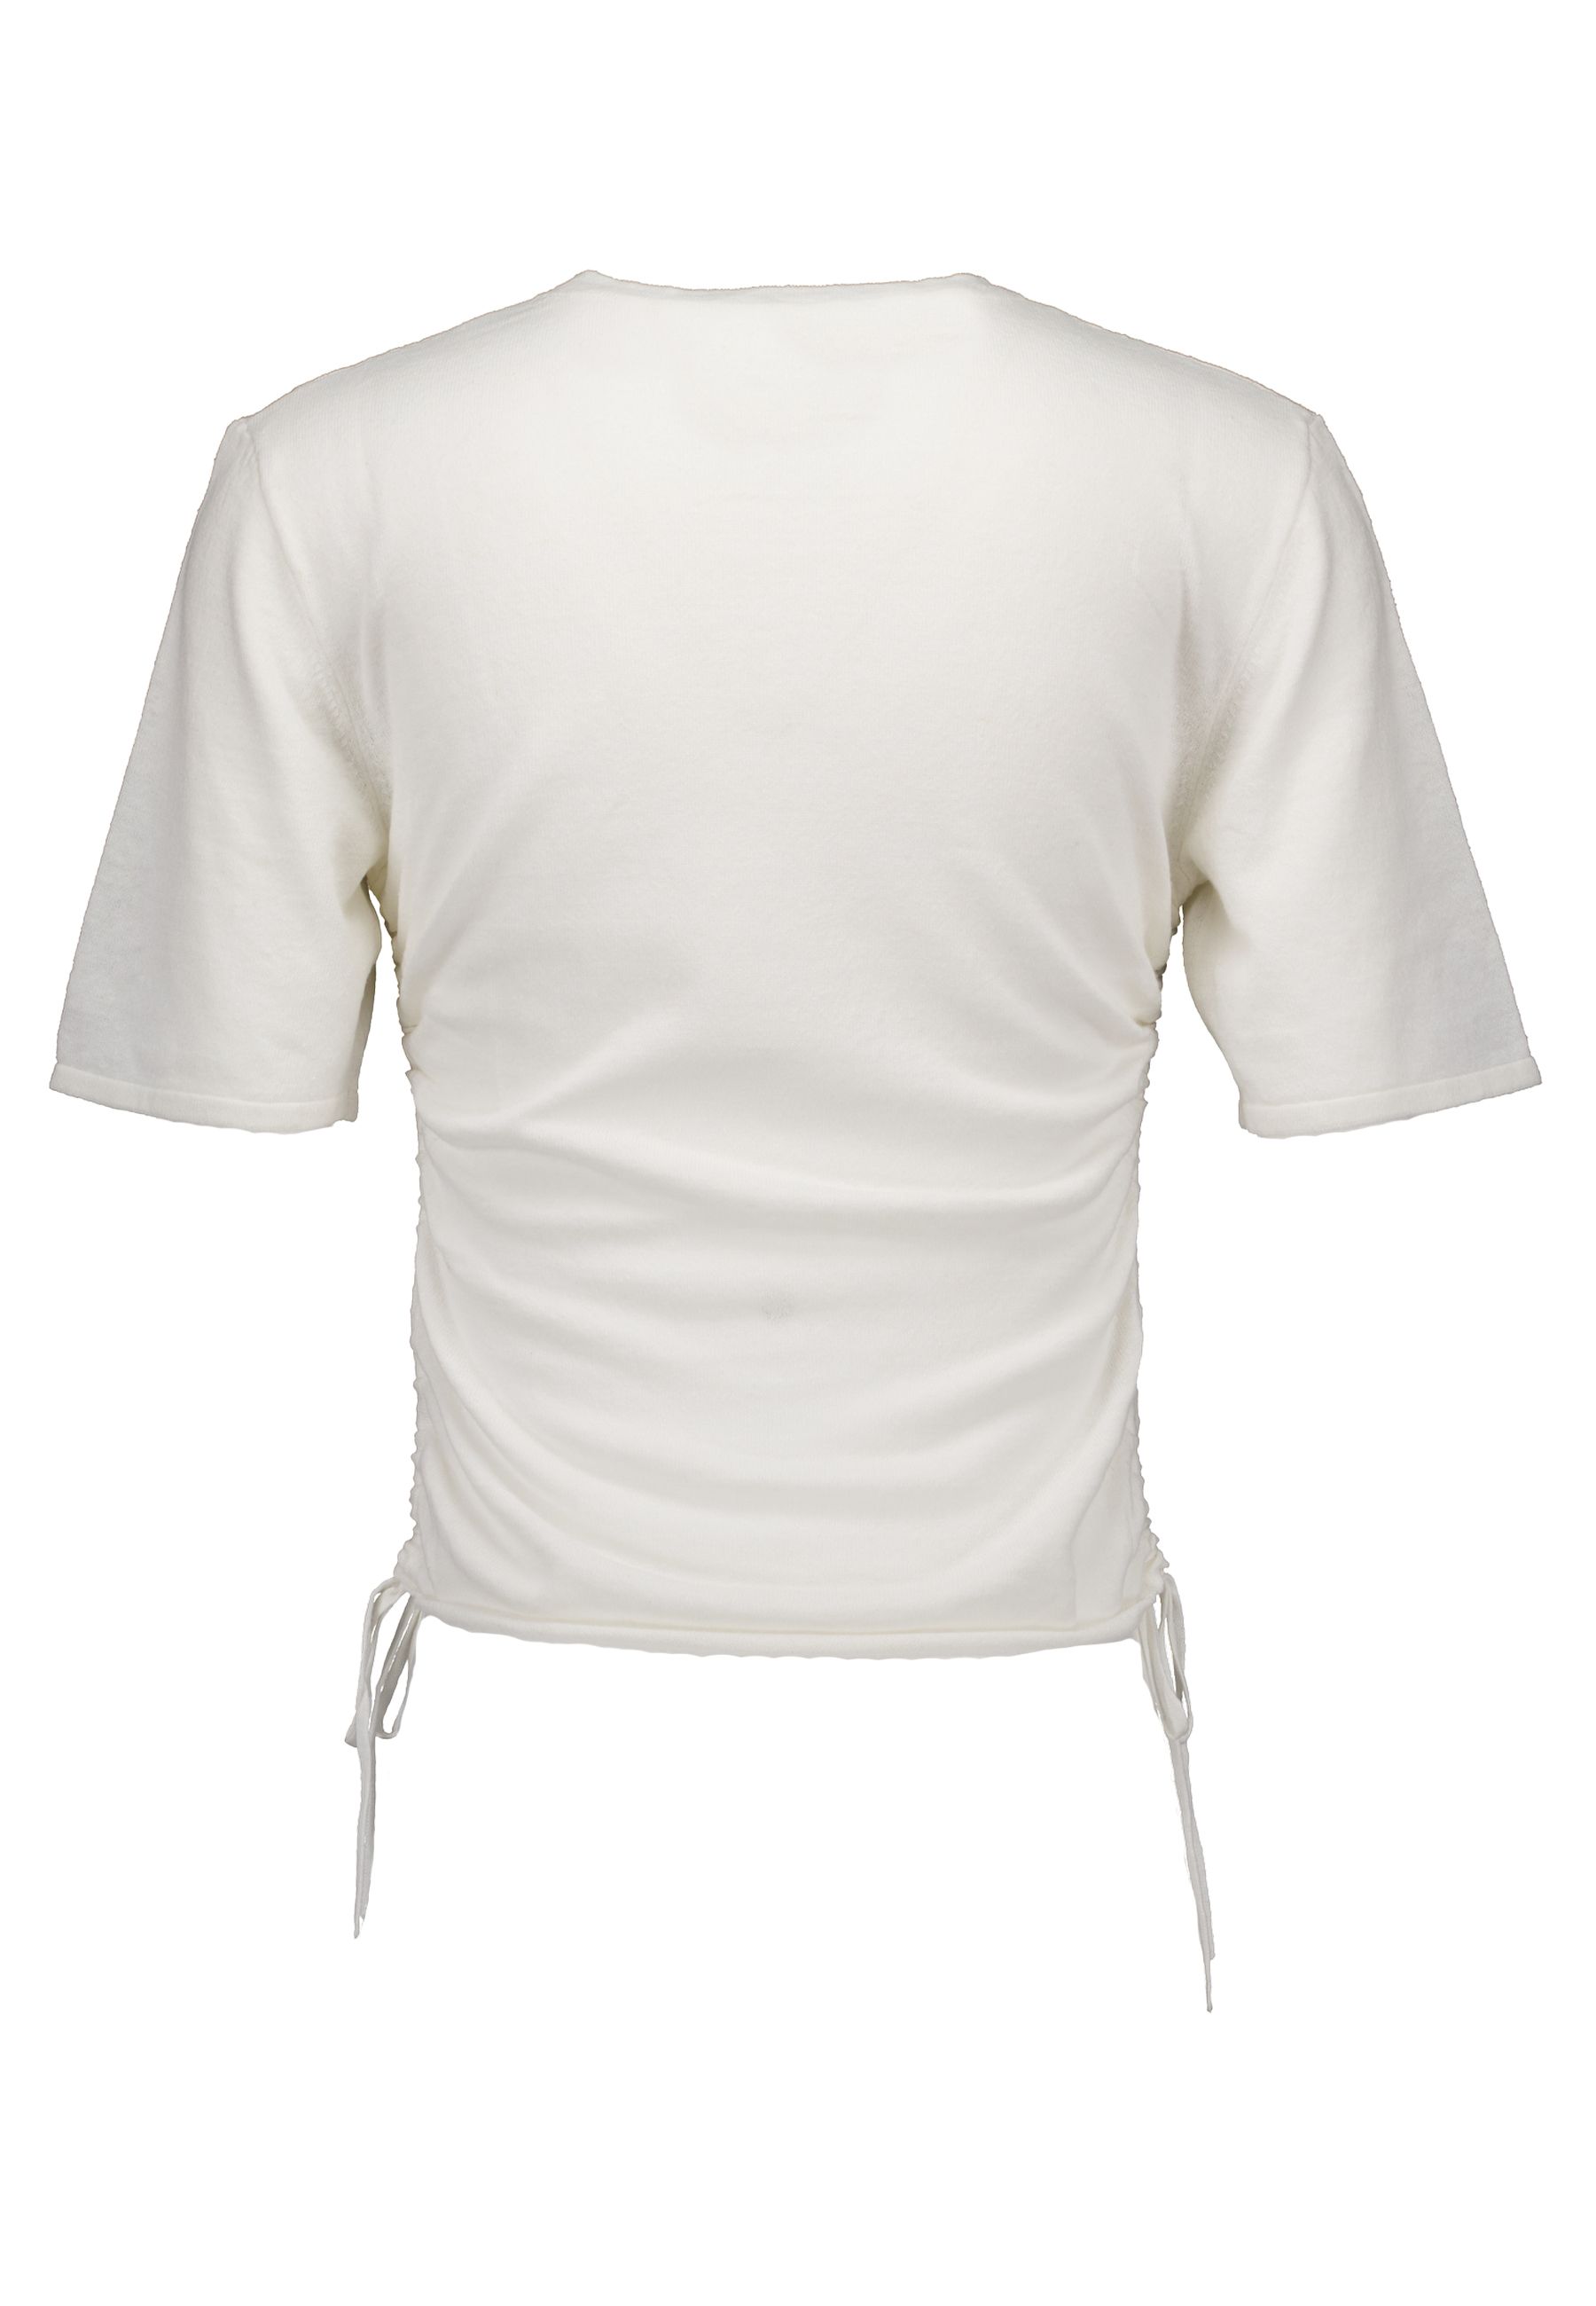 Saalbane t-shirts off white